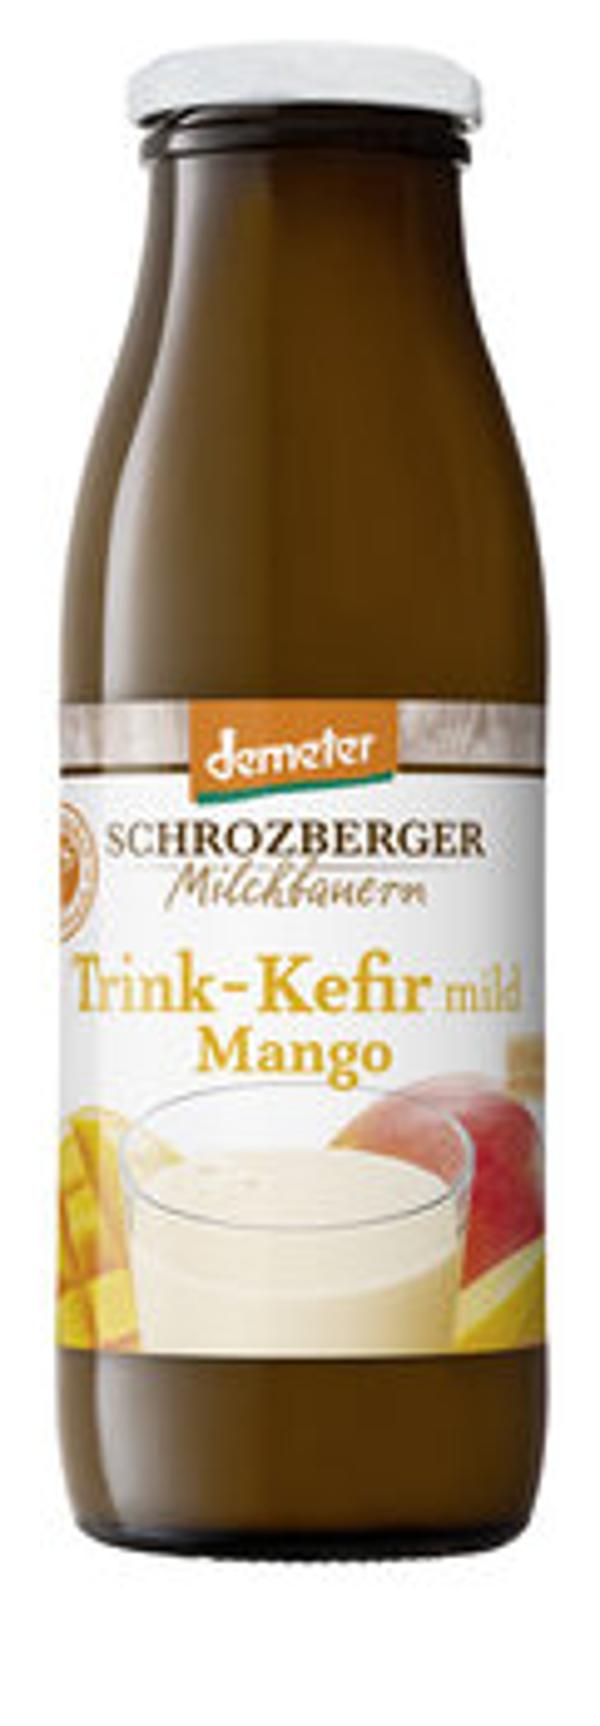 Produktfoto zu Trink-Kefir Mango mild